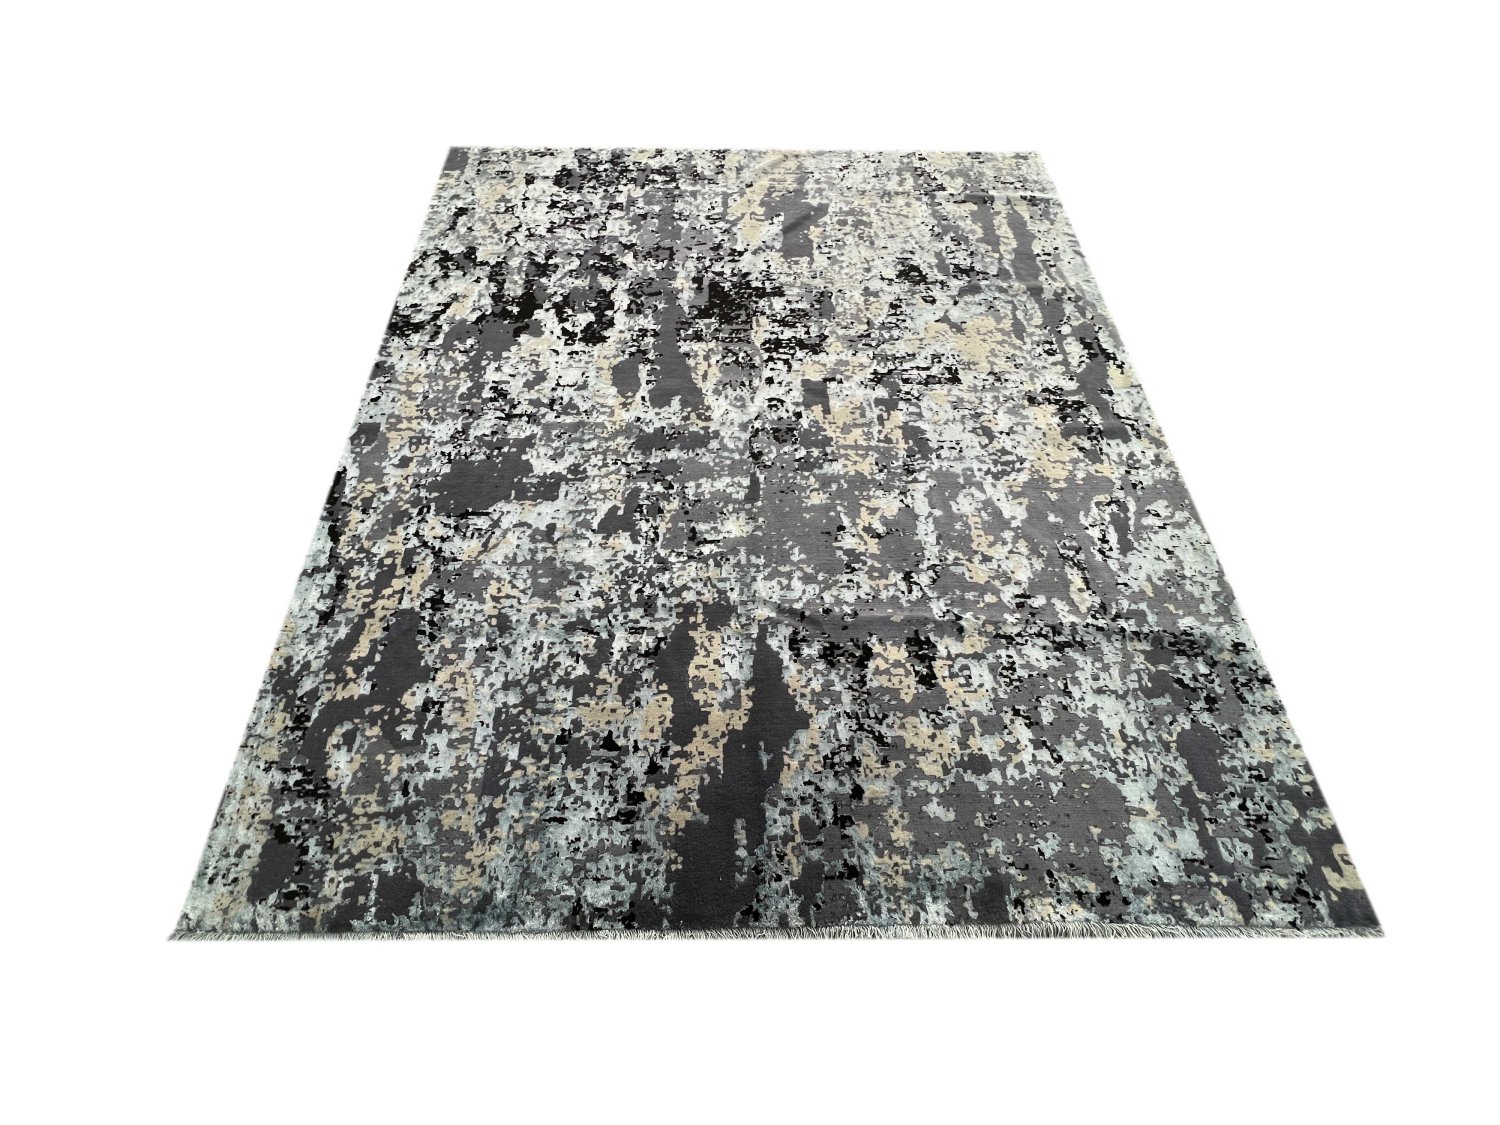 فرش پشمی ماشینی طبیعی و ارگانیک کد 5096 - زمینه طوسی پر رنگ - حاشیه آبی کم رنگ